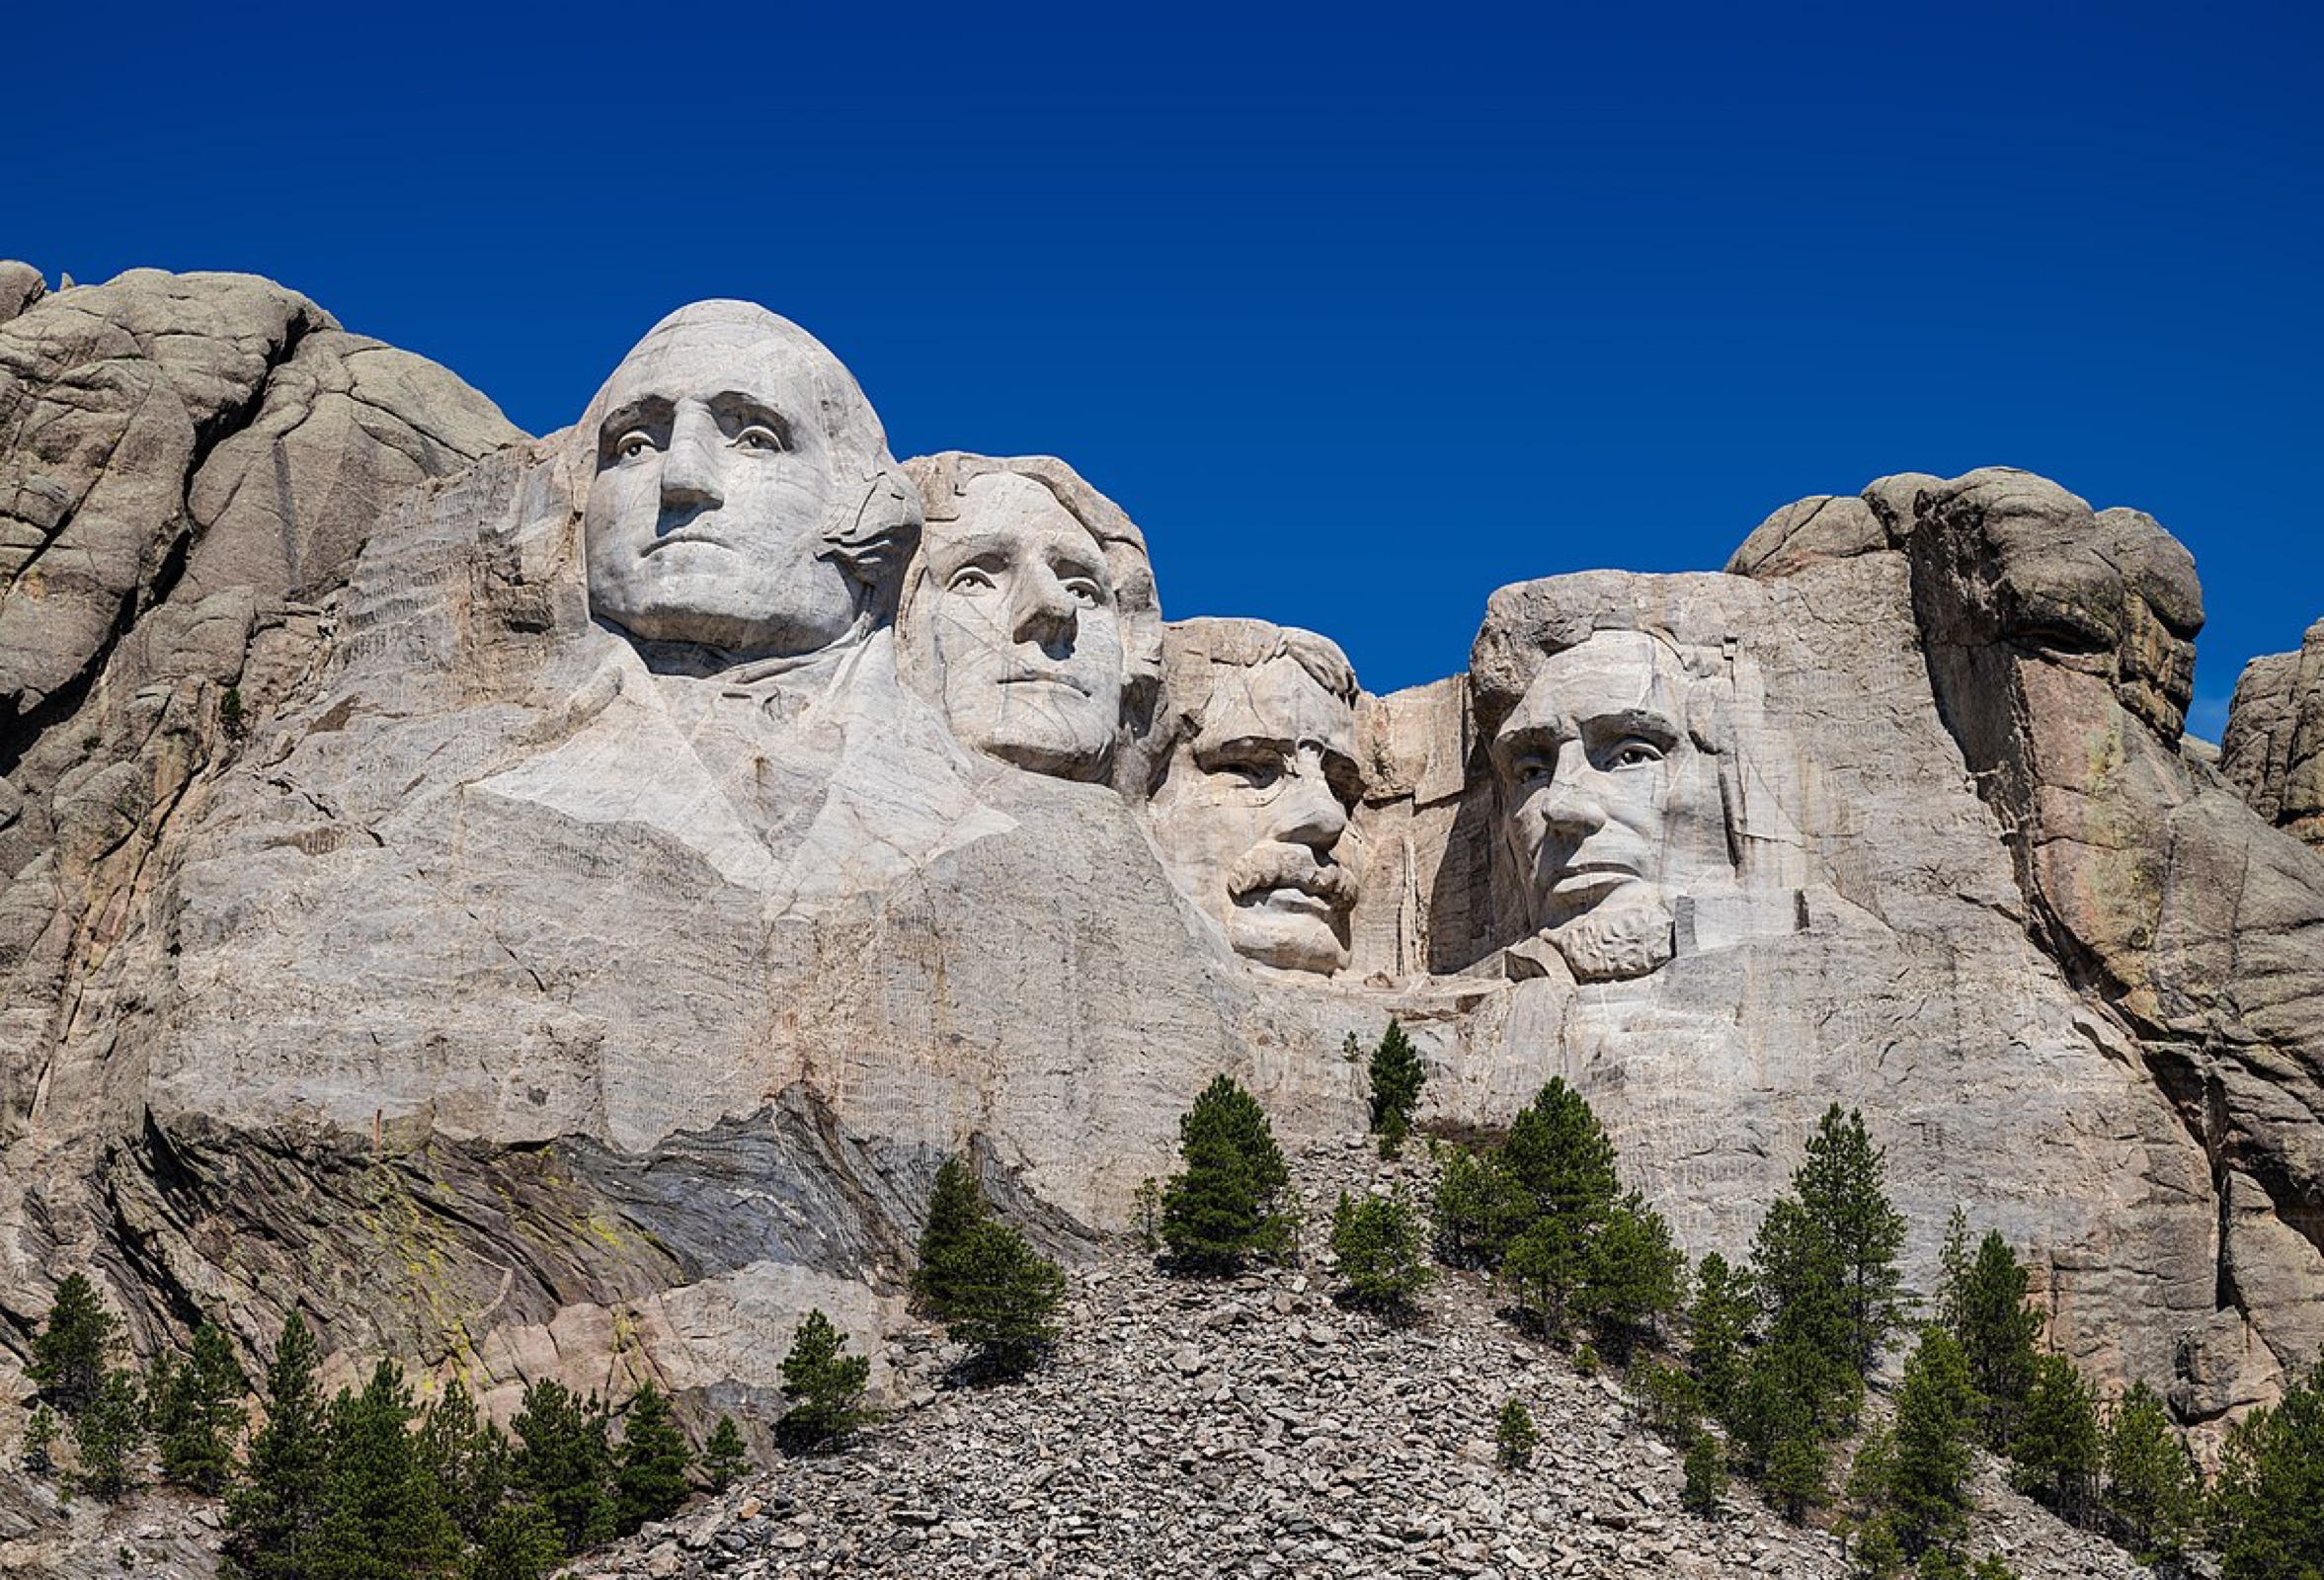 The Mount Rushmore of Woke